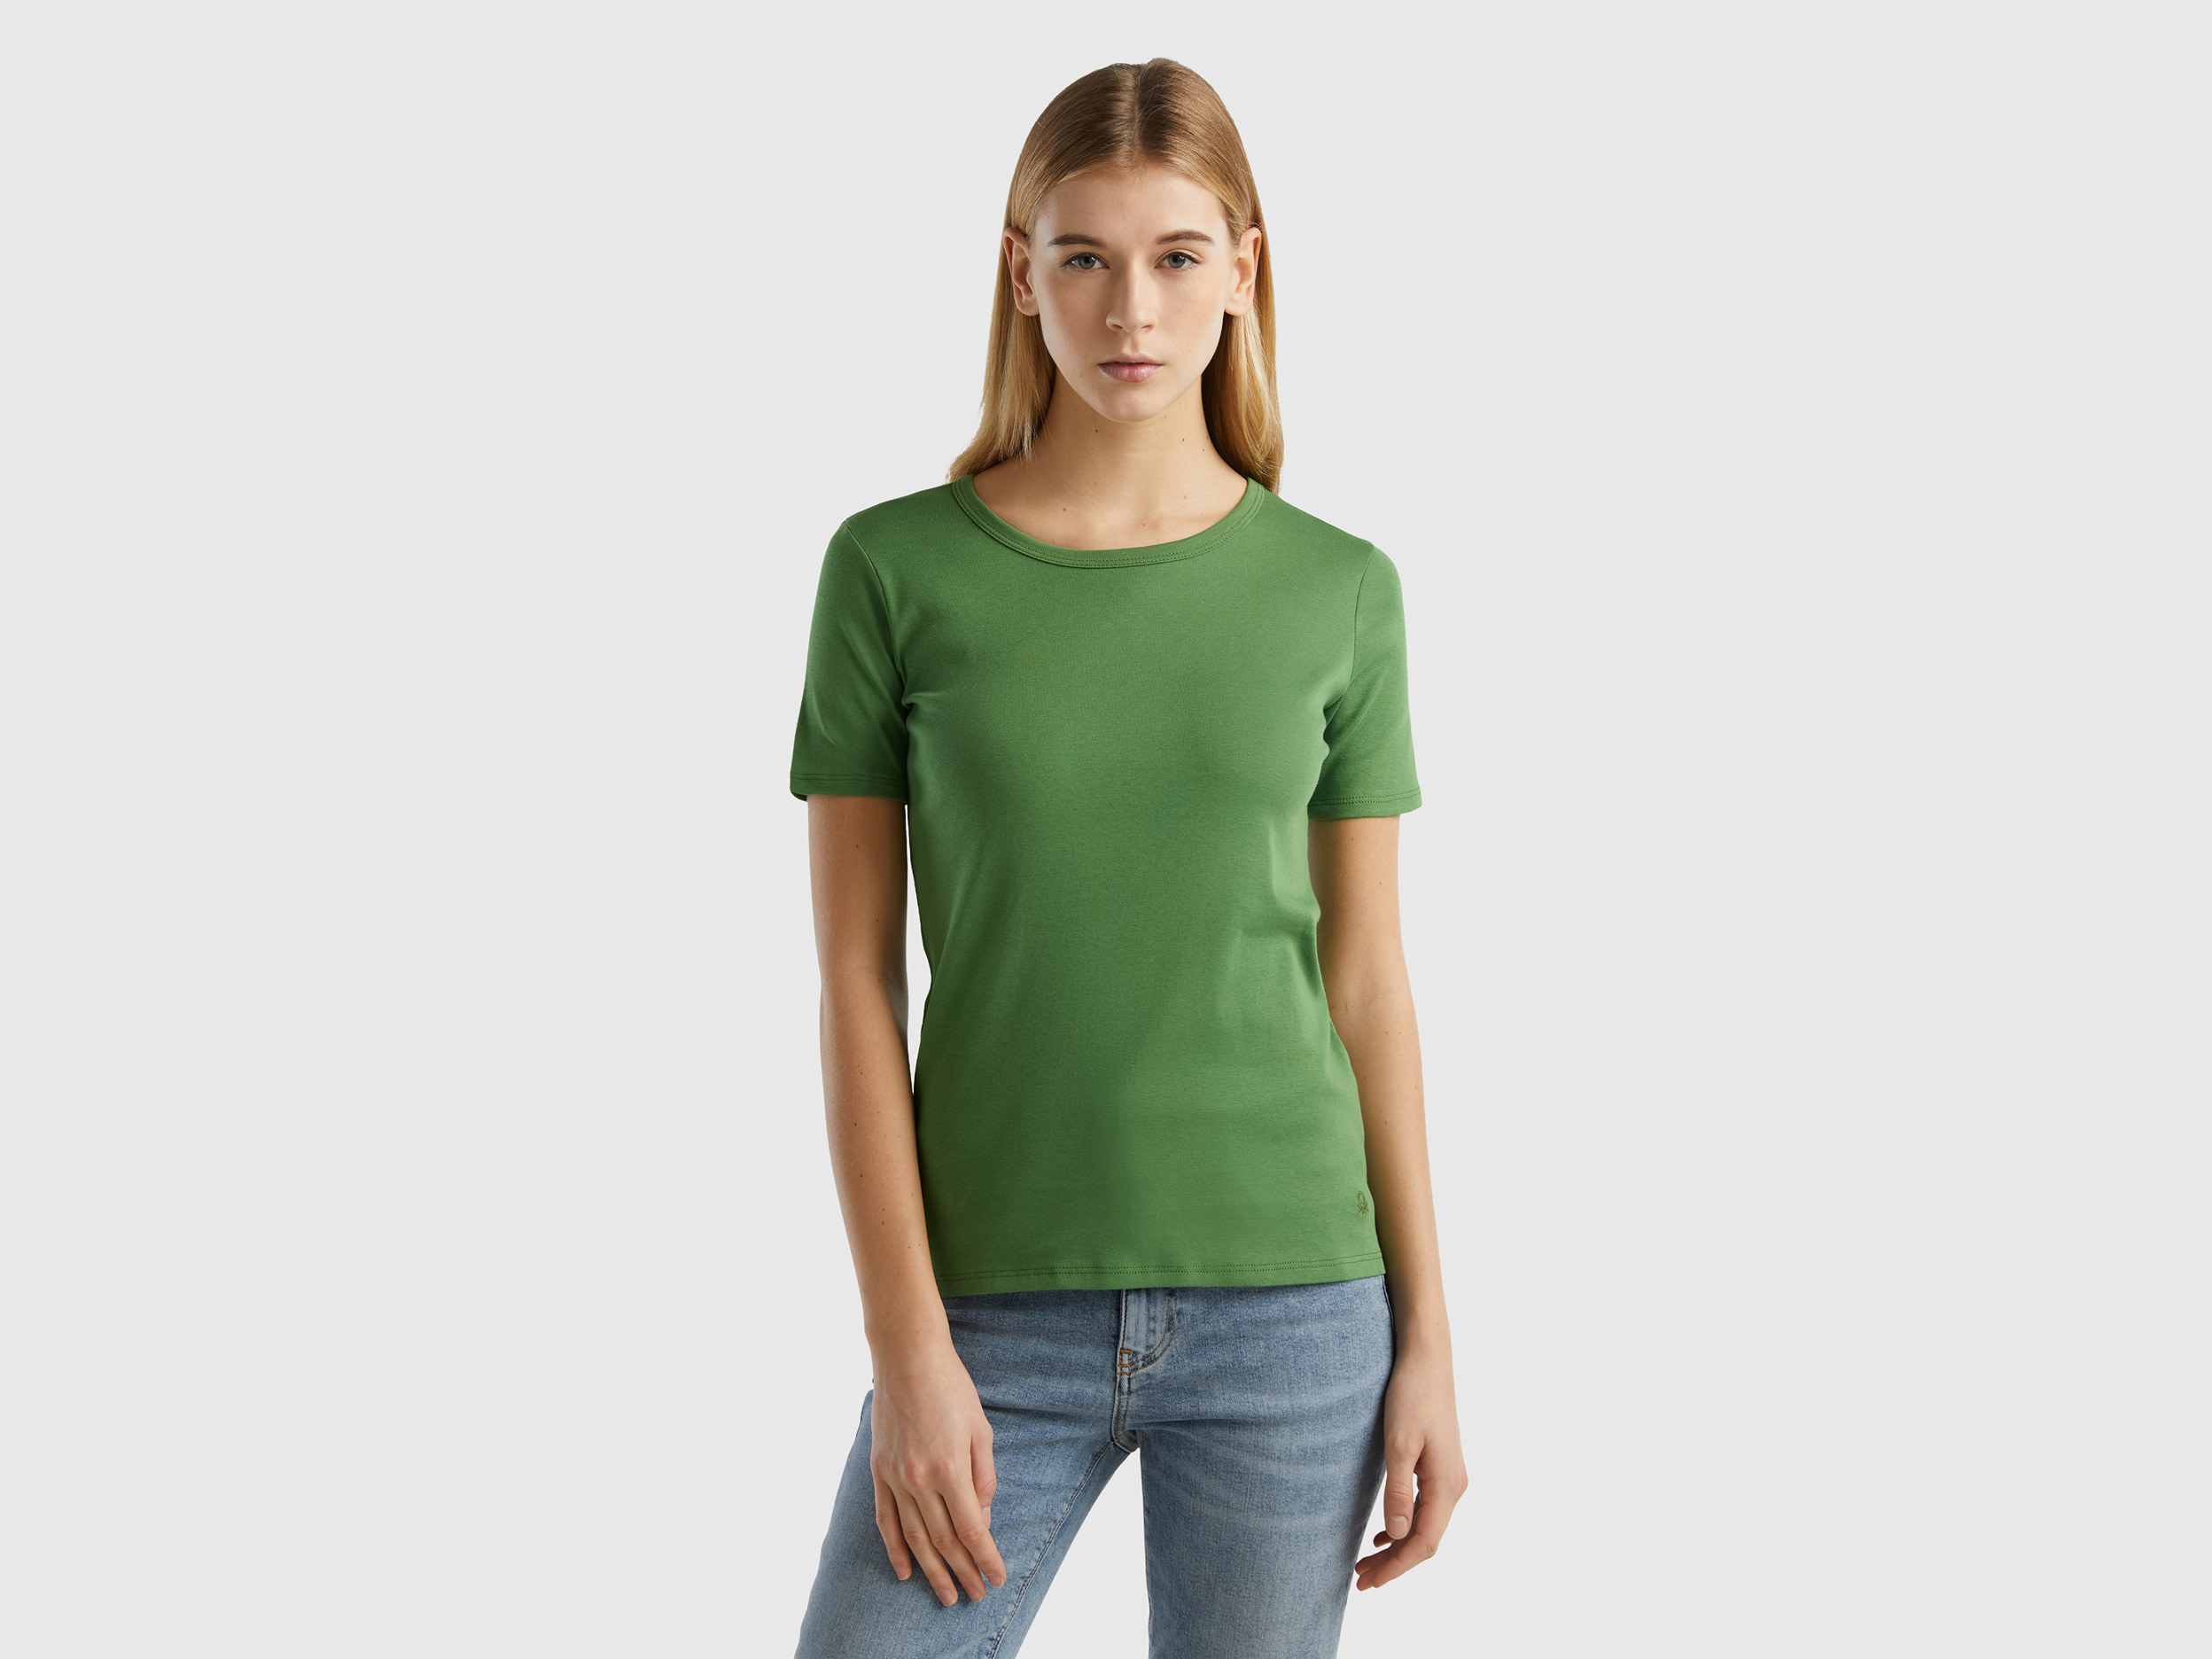 Benetton, Long Fiber Cotton T-shirt, size S, Military Green, Women